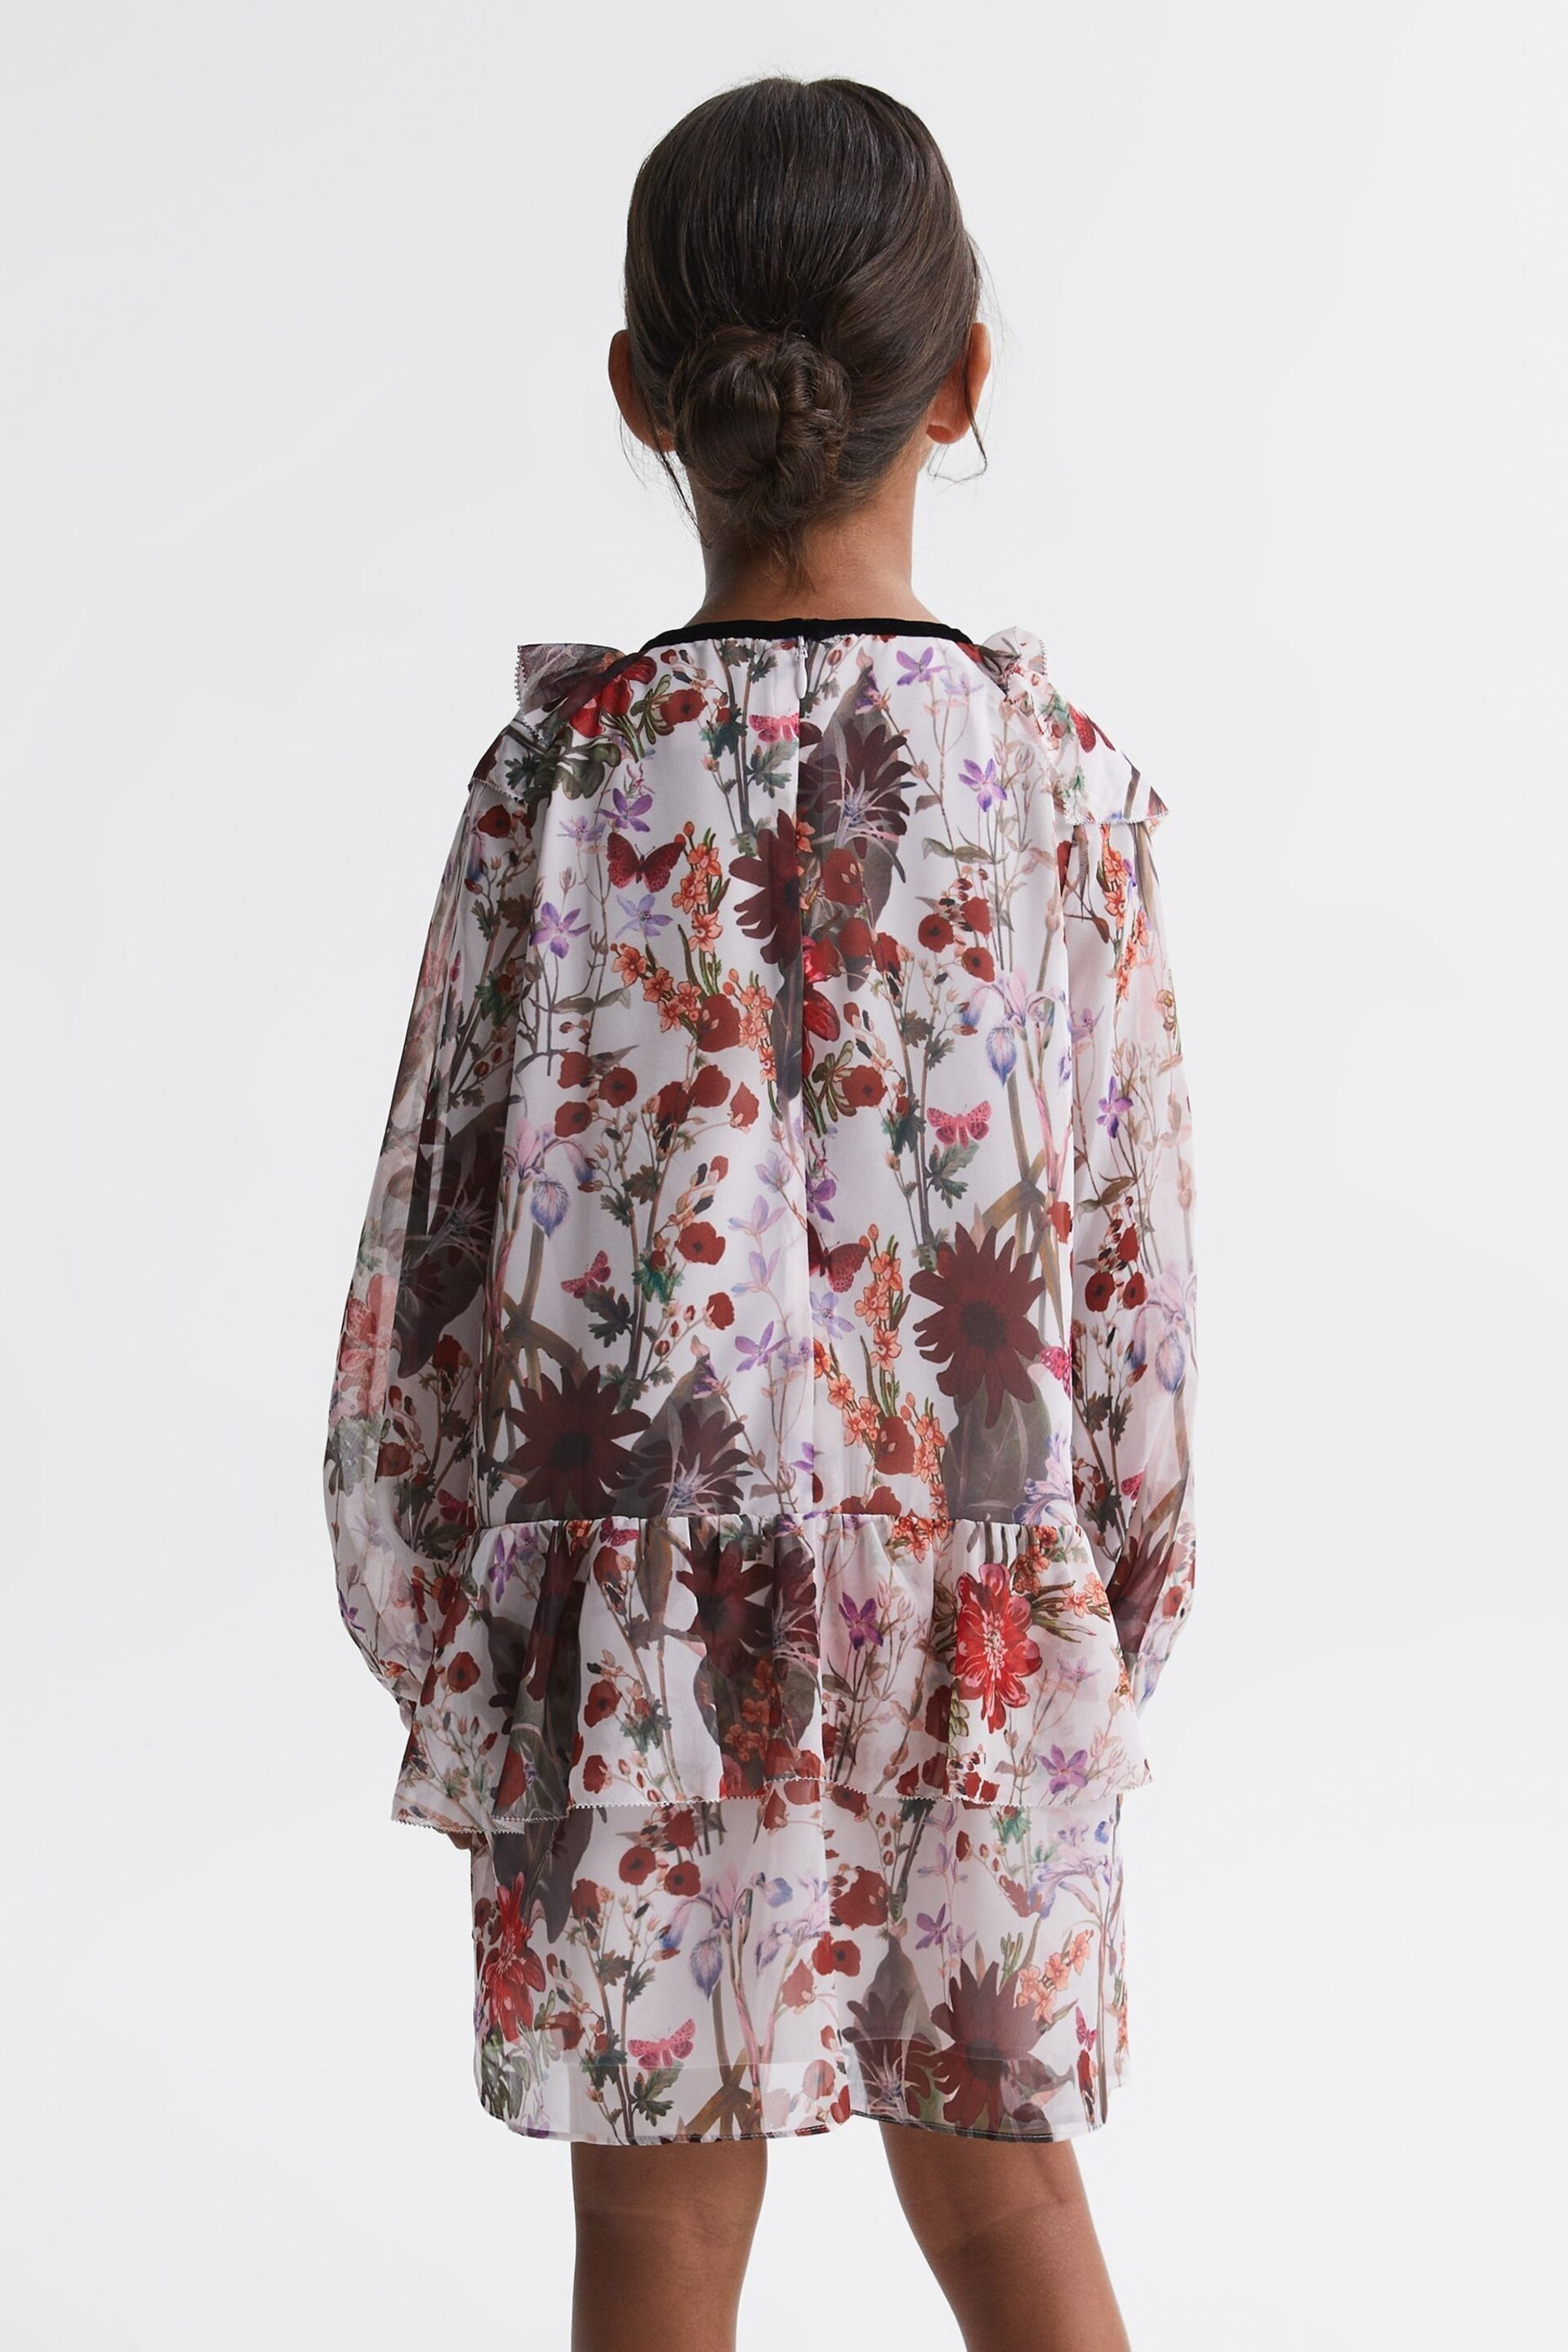 Reiss Multi Yara Senior Floral Frill Bow Dress - Image 5 of 6